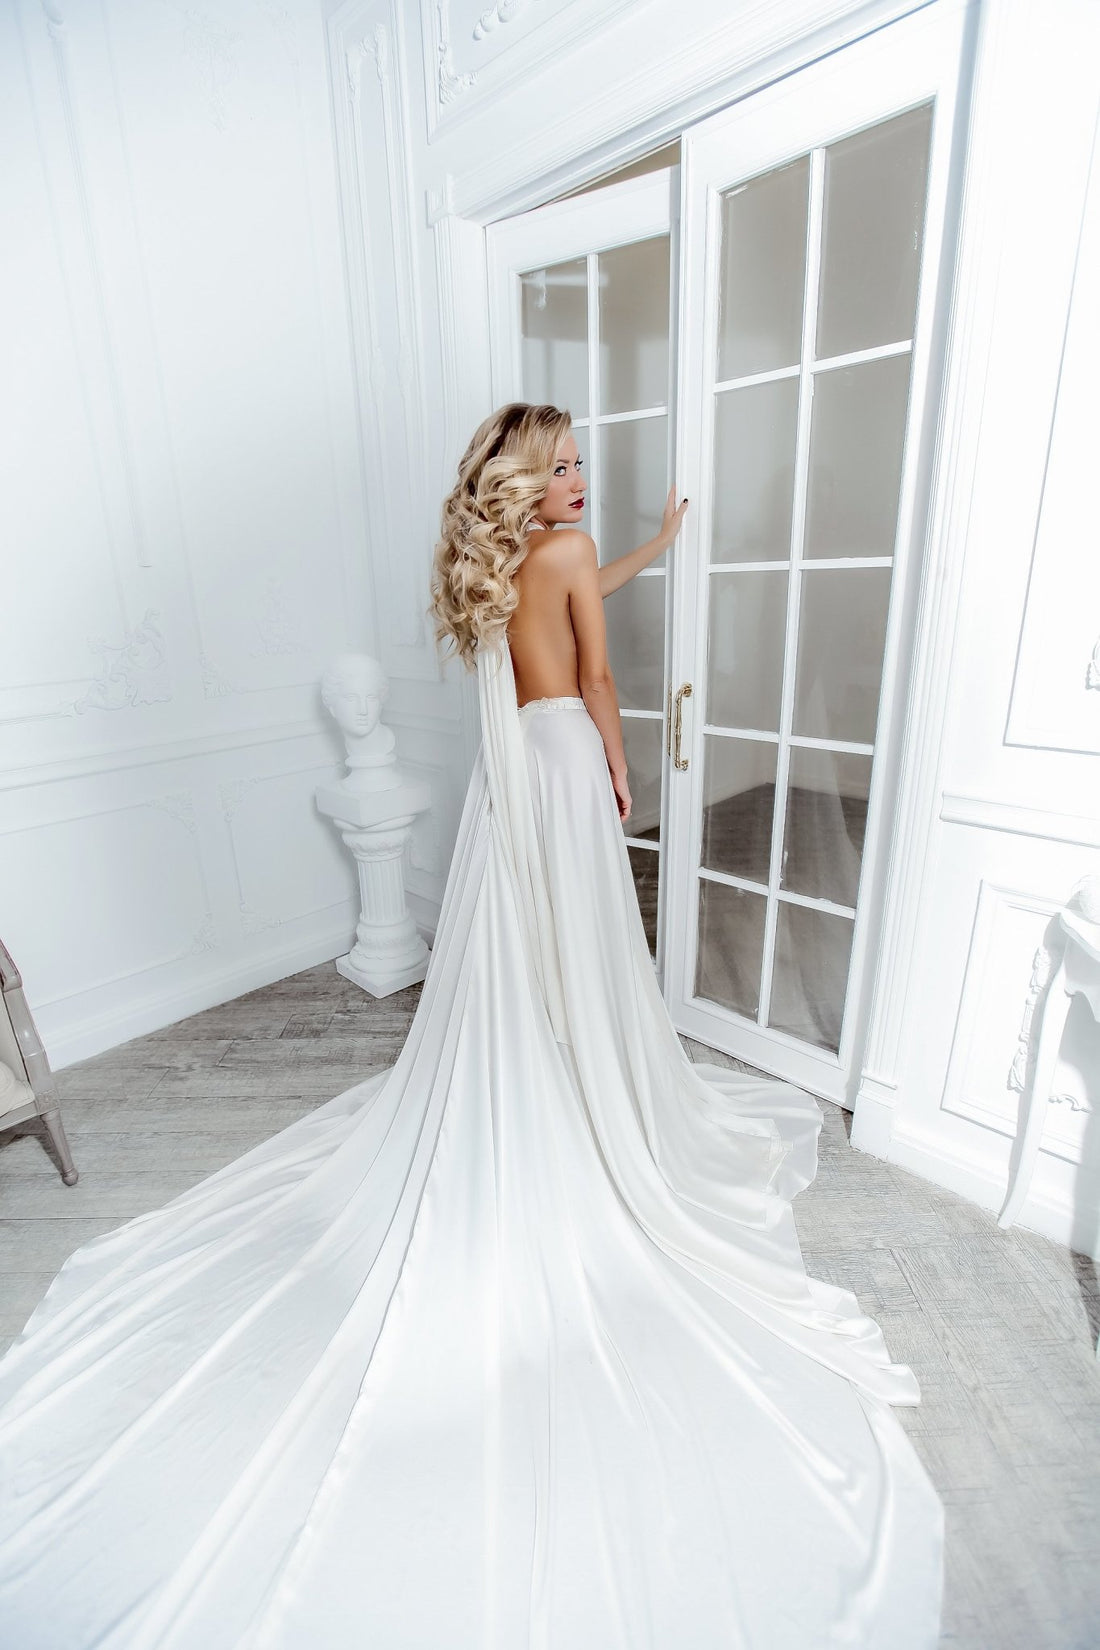 Plain Silk Fabrics : Wedding Dress Styling - Bridal Fabrics